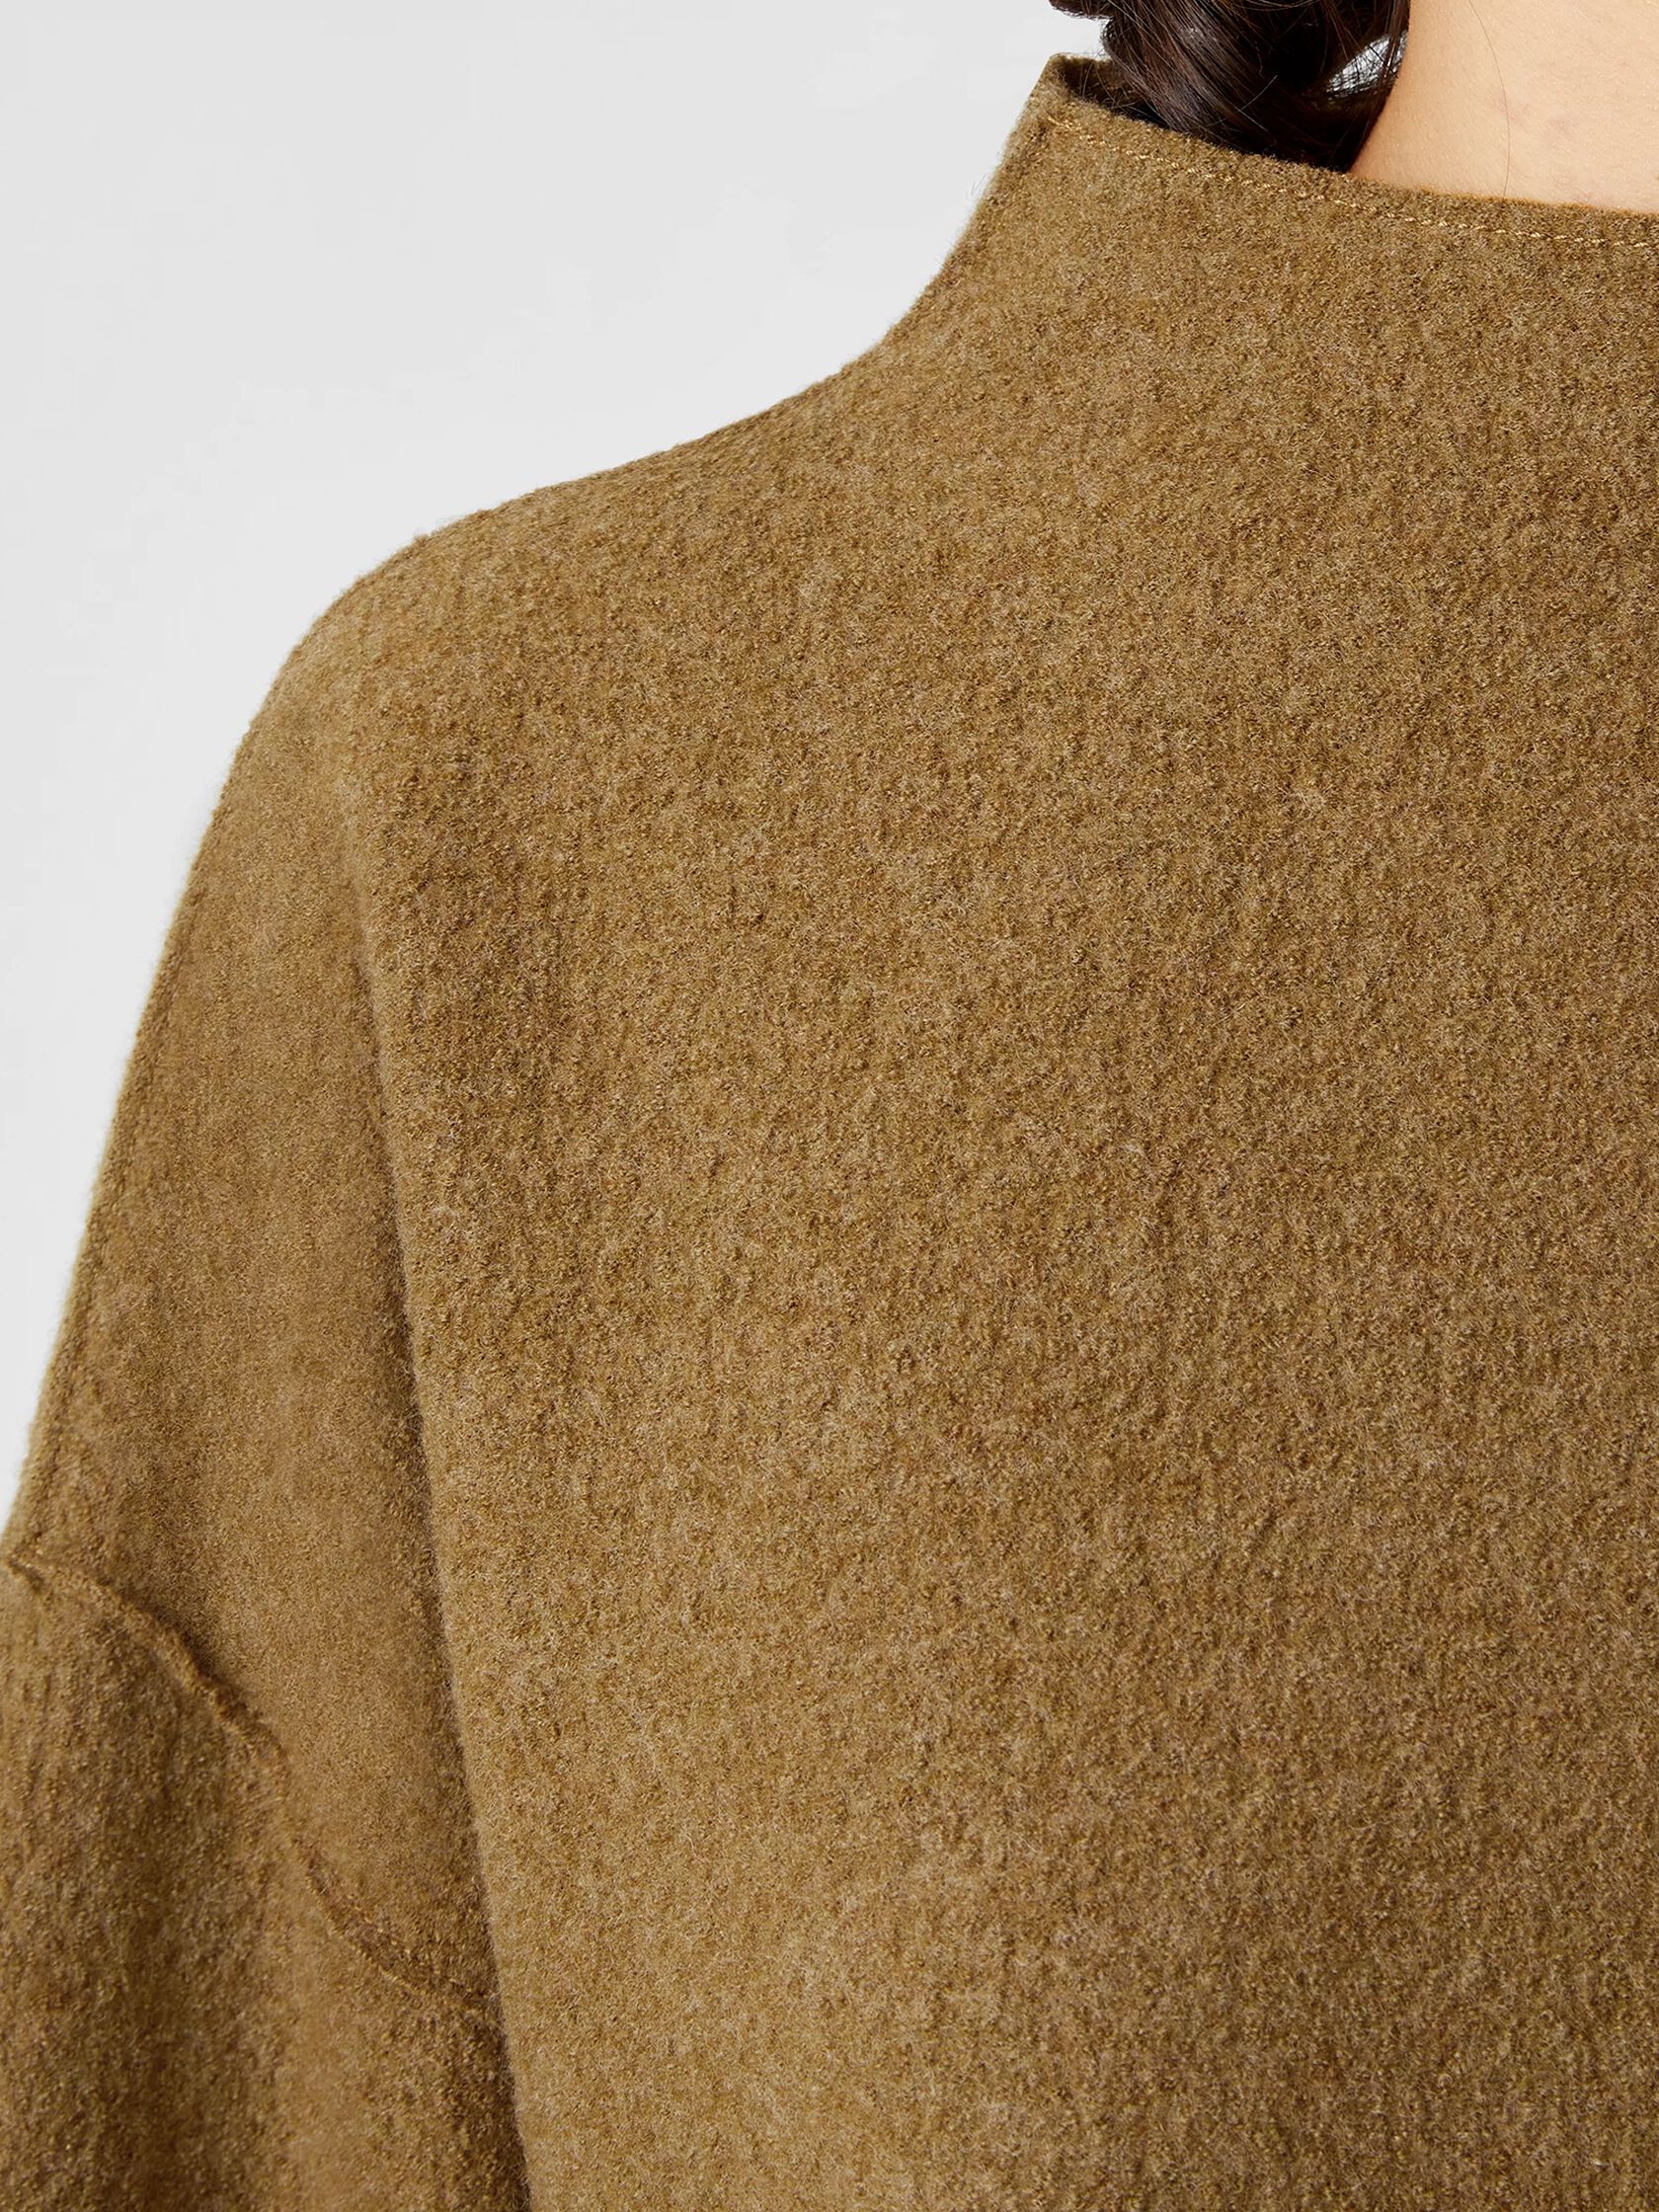 Lightweight Boiled Wool Top in Responsible Wool